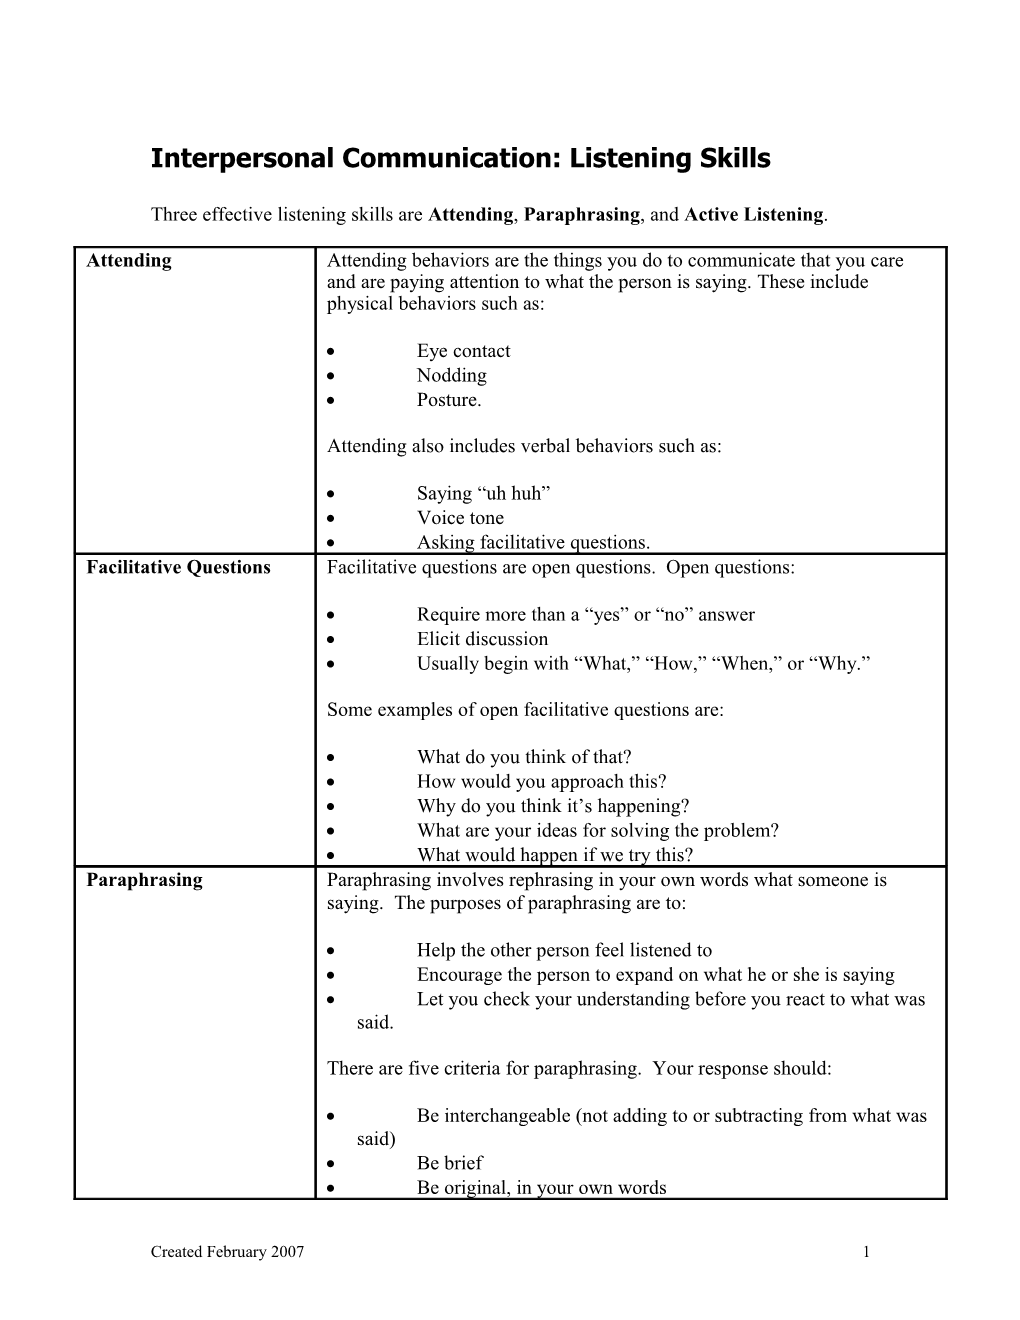 Interpersonal Communication: Listening Skills